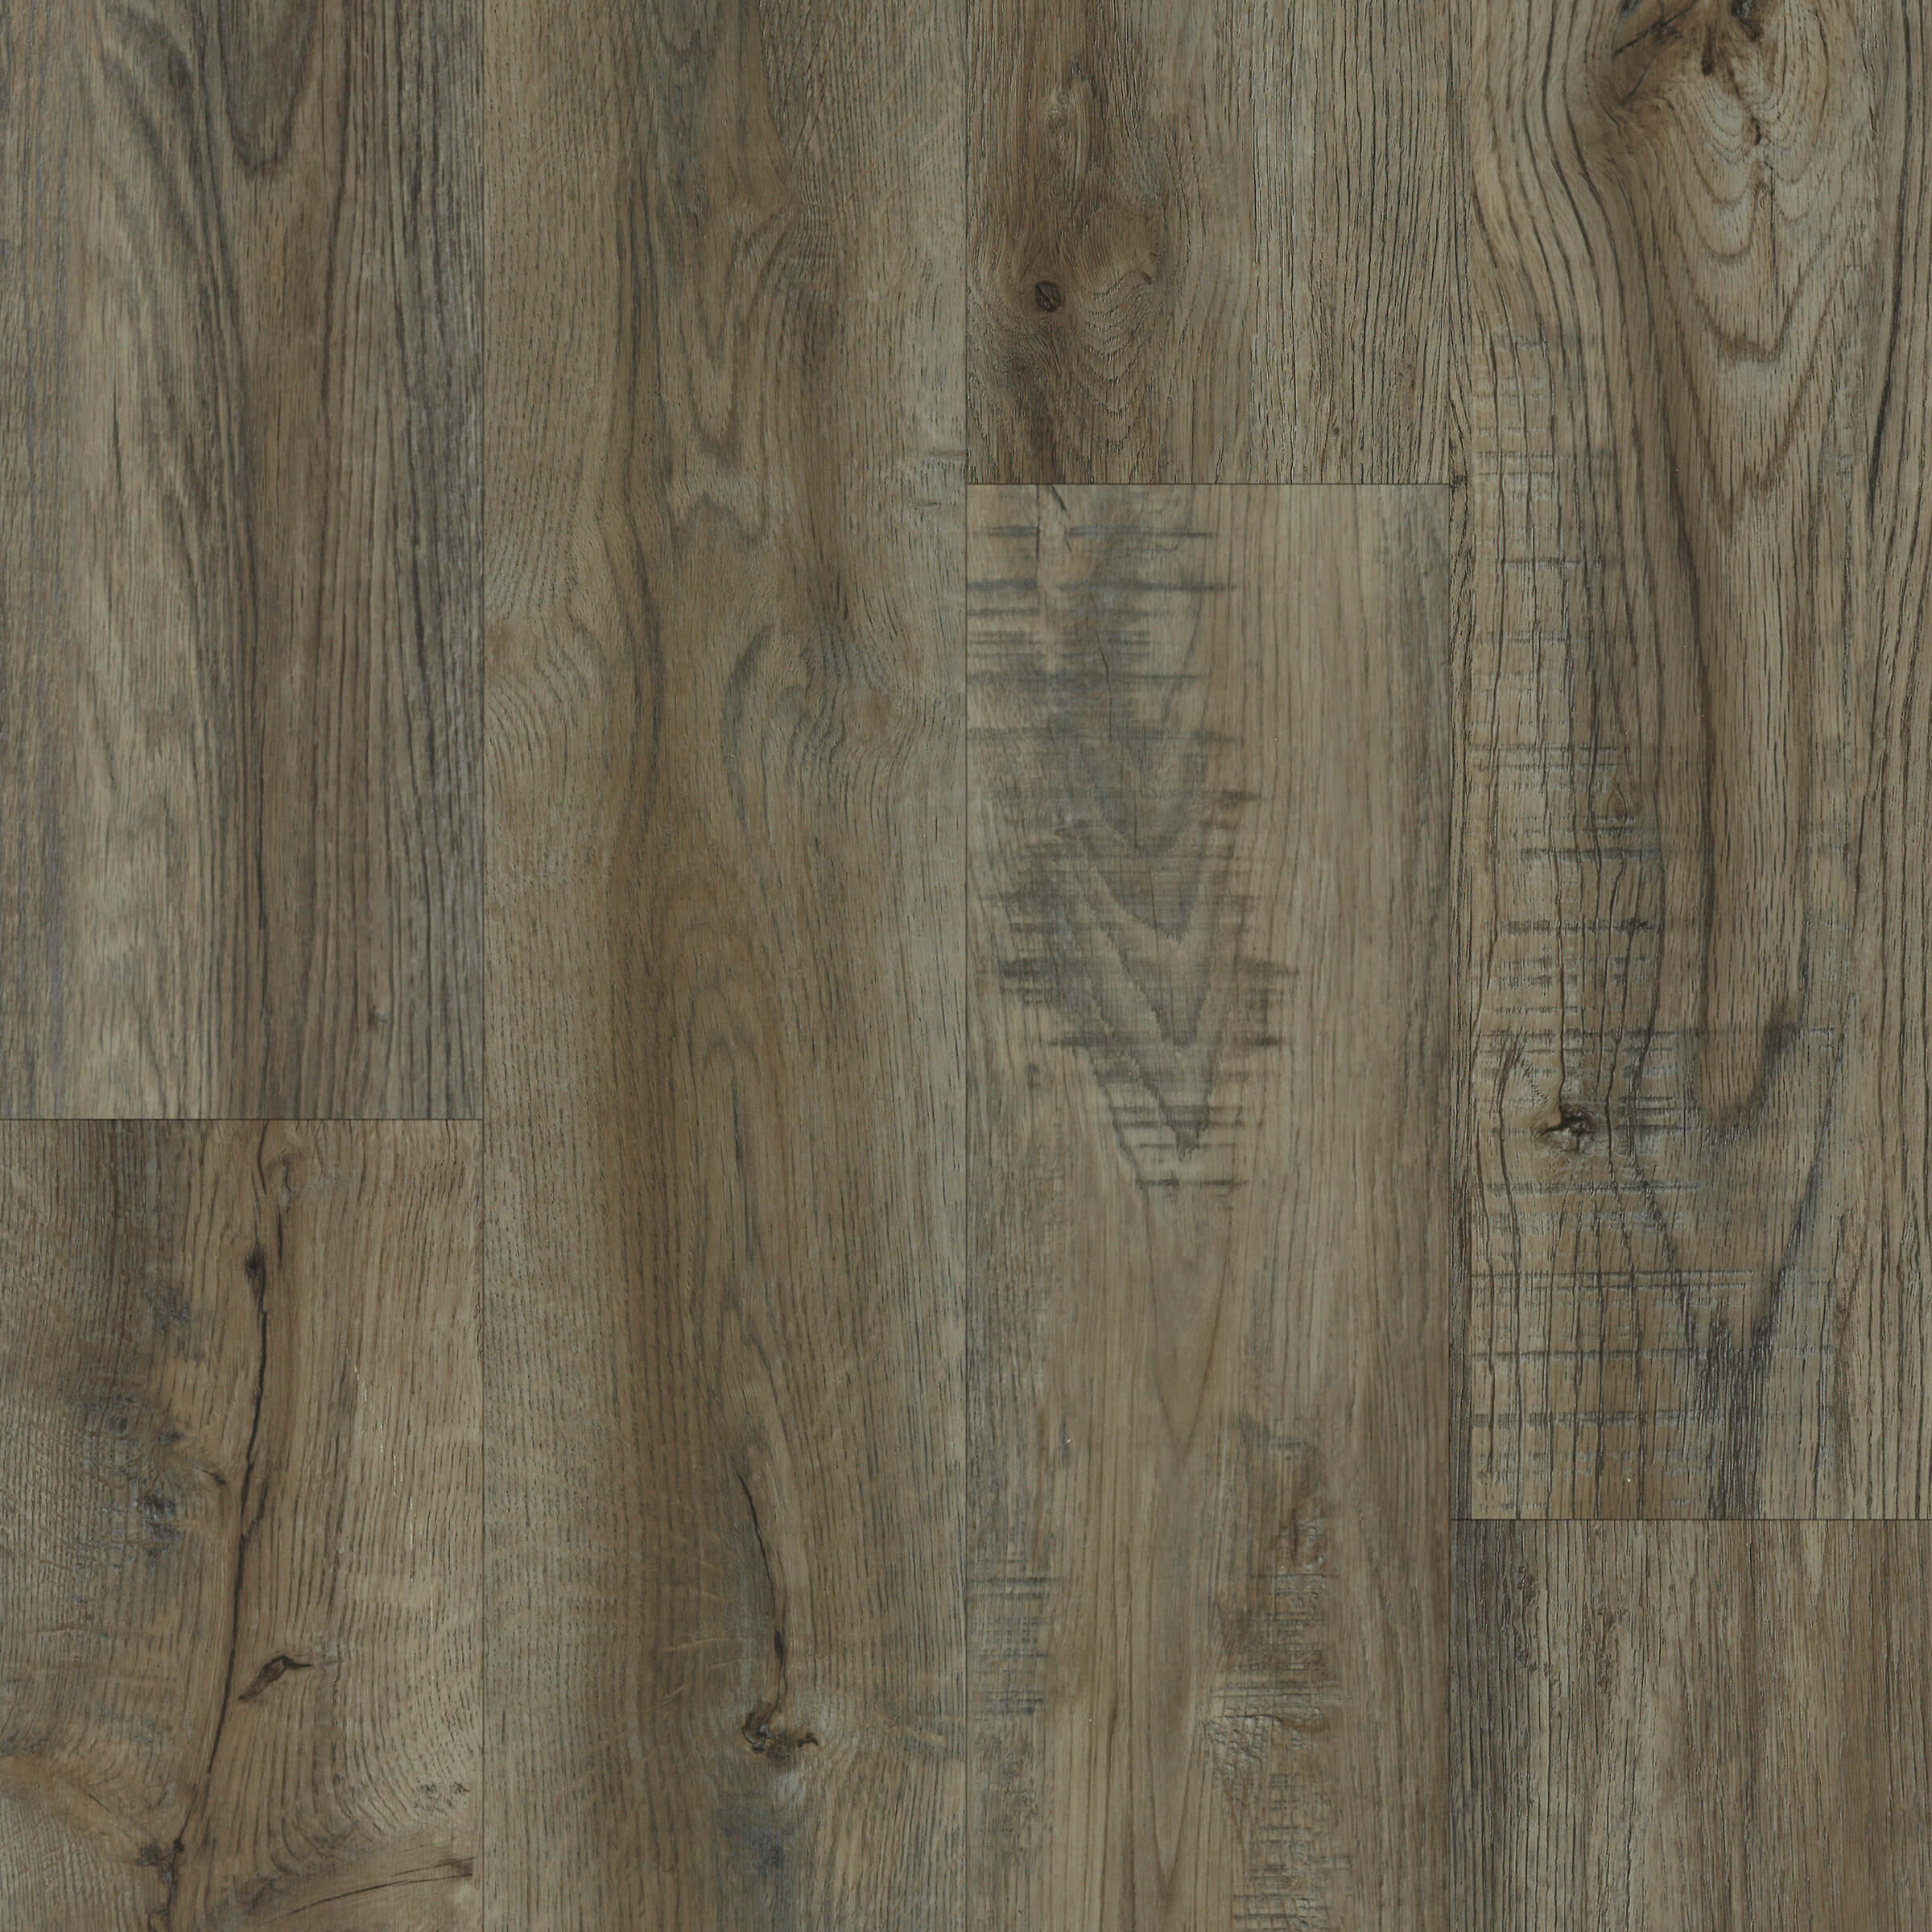 Luxury Vinyl Plank Tile Flooring, Cork Vinyl Plank Flooring